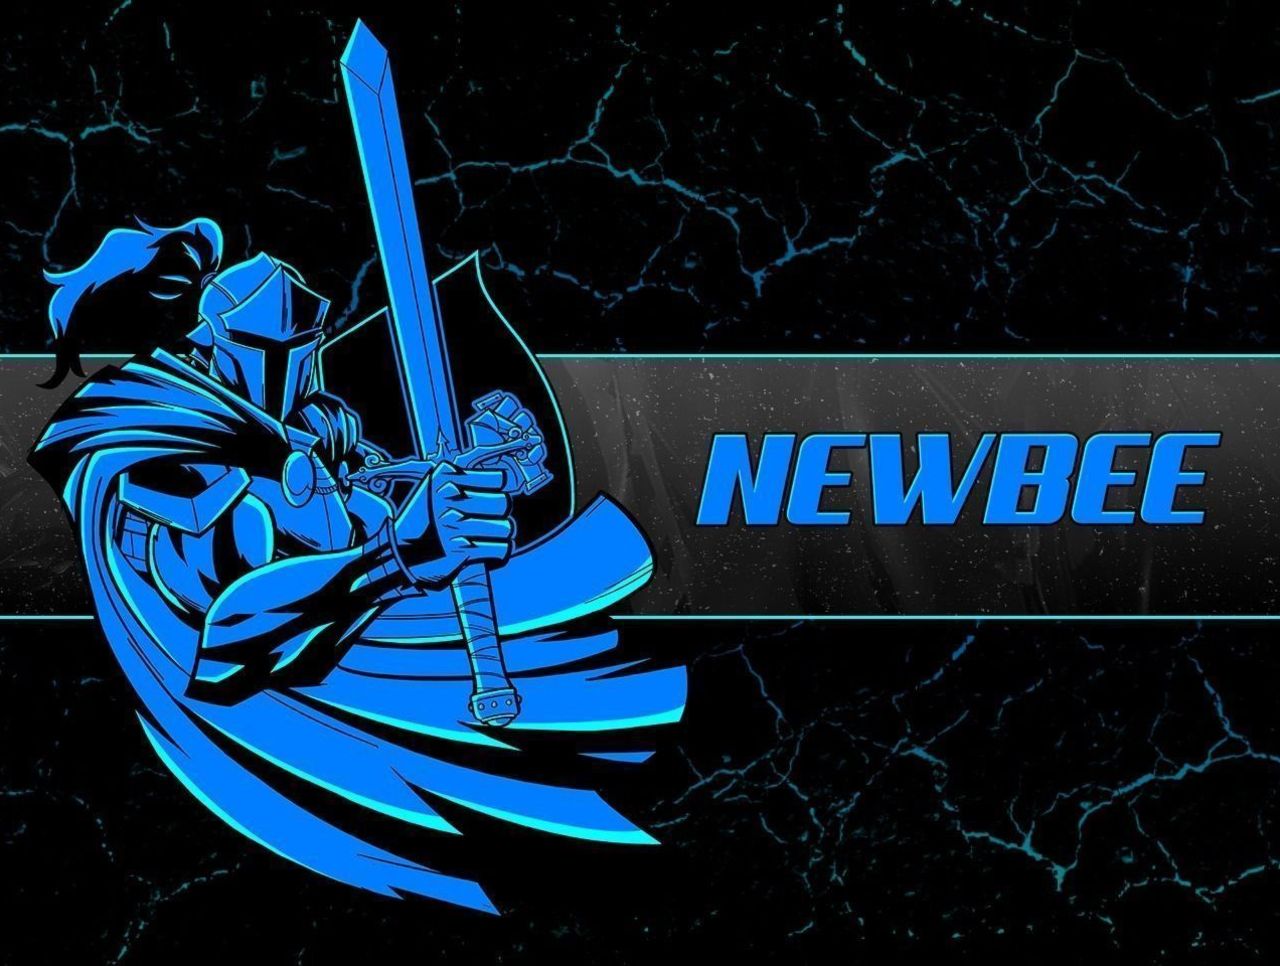 newbee logo